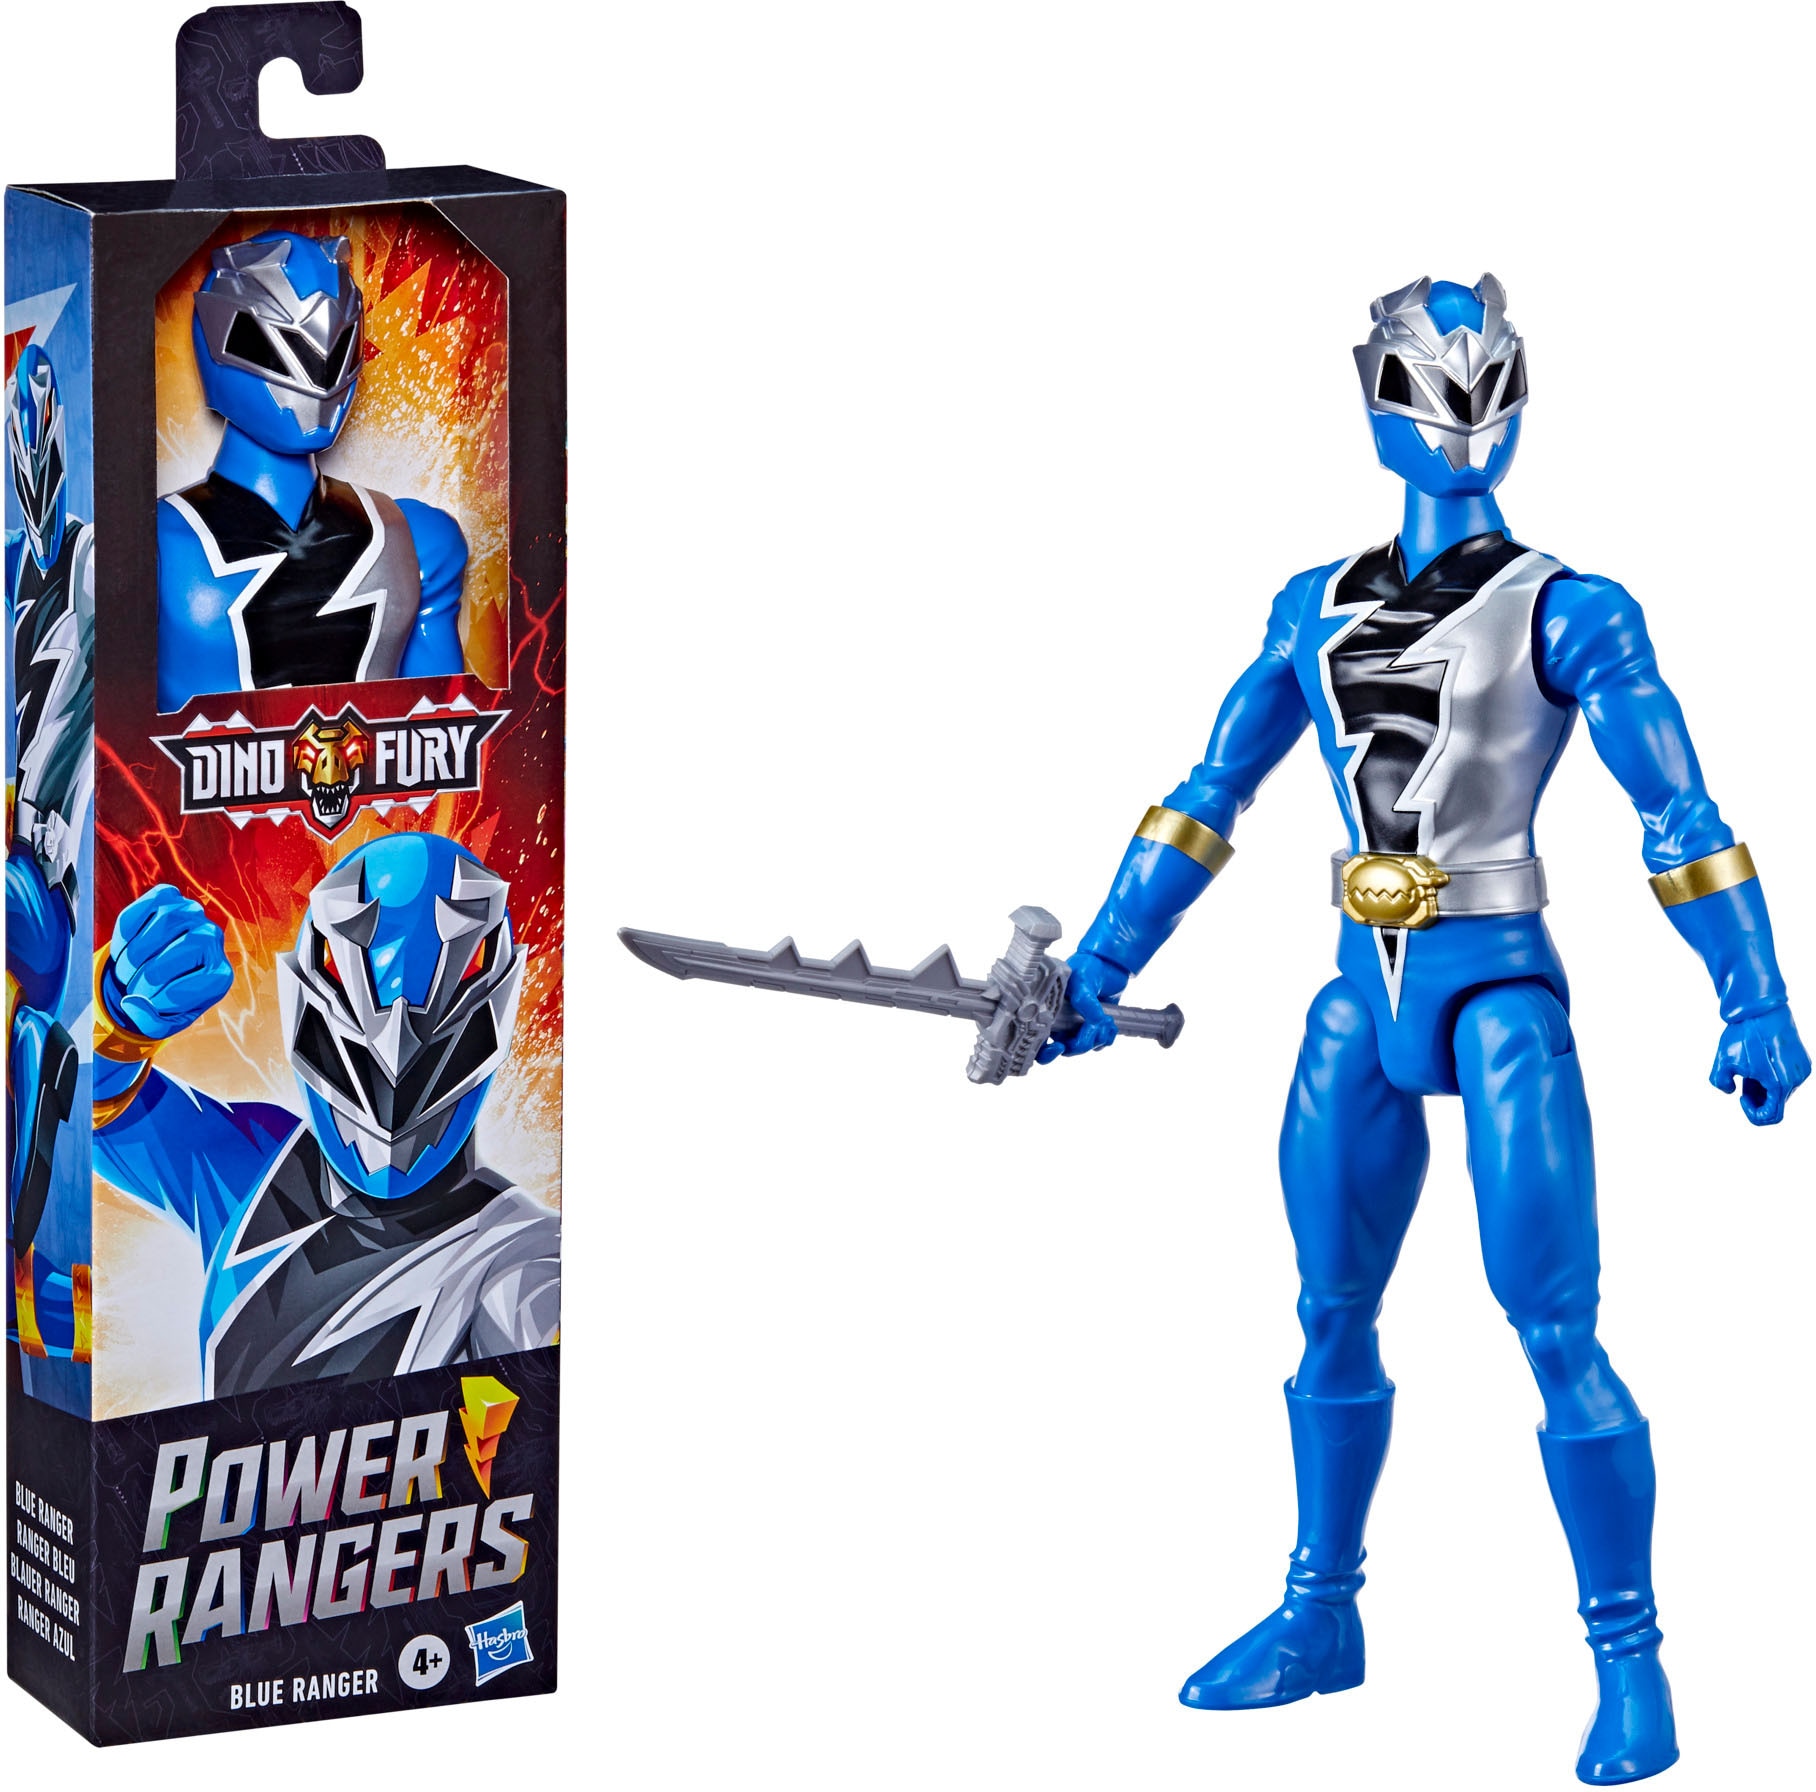 Hasbro Actionfigur »Power Rangers Dino OTTO Fury Blauer bei Ranger, 30 cm«